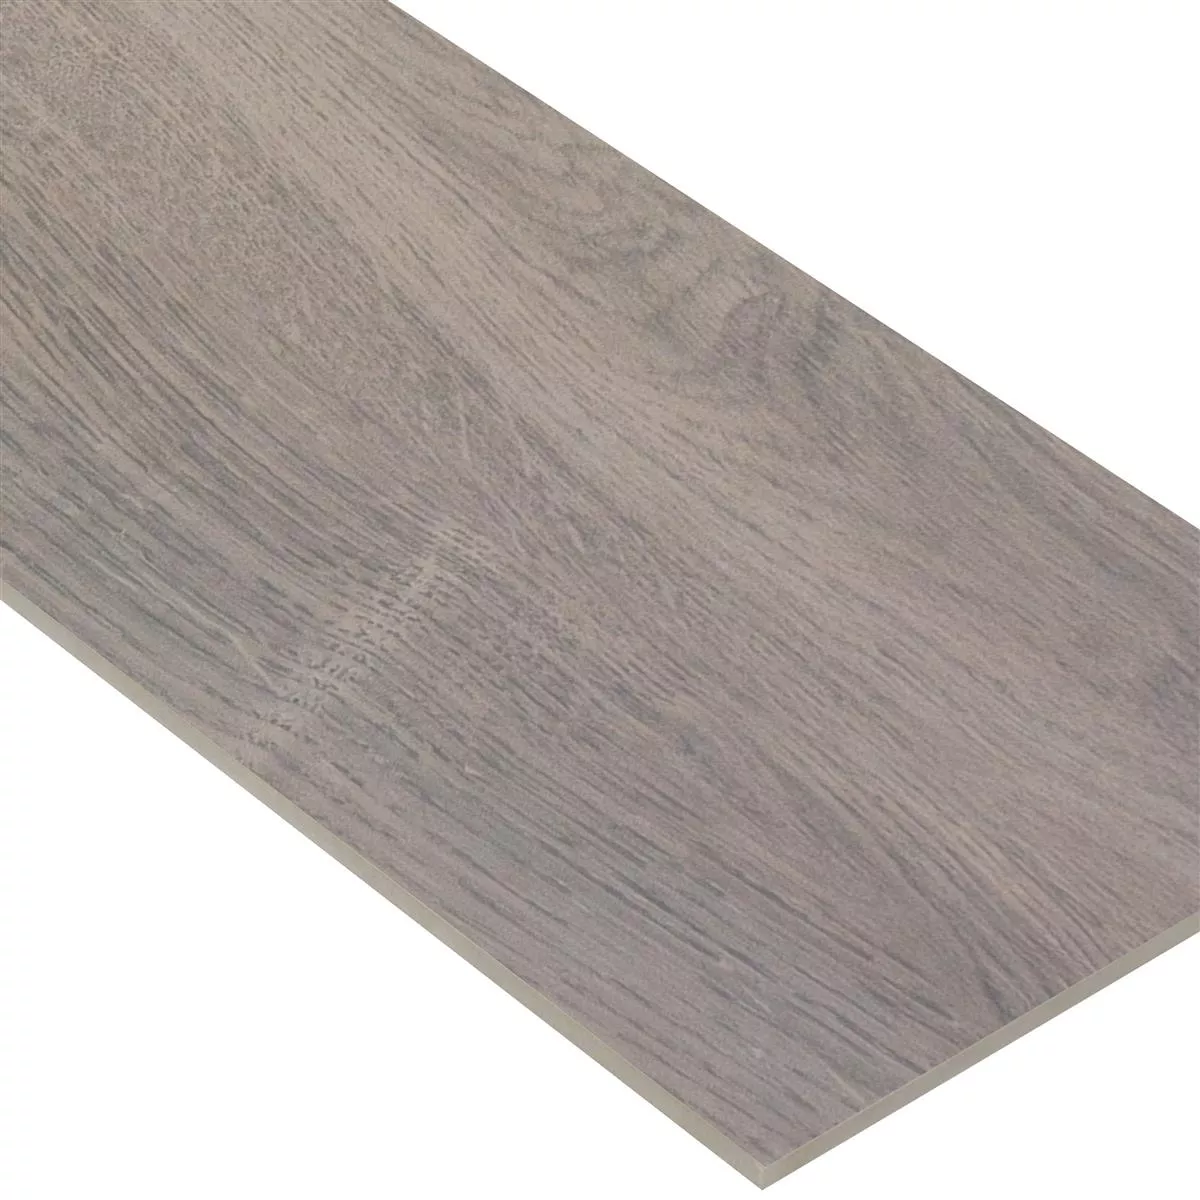 Sample Floor Tiles Wood Optic Fullwood Brown 20x120cm